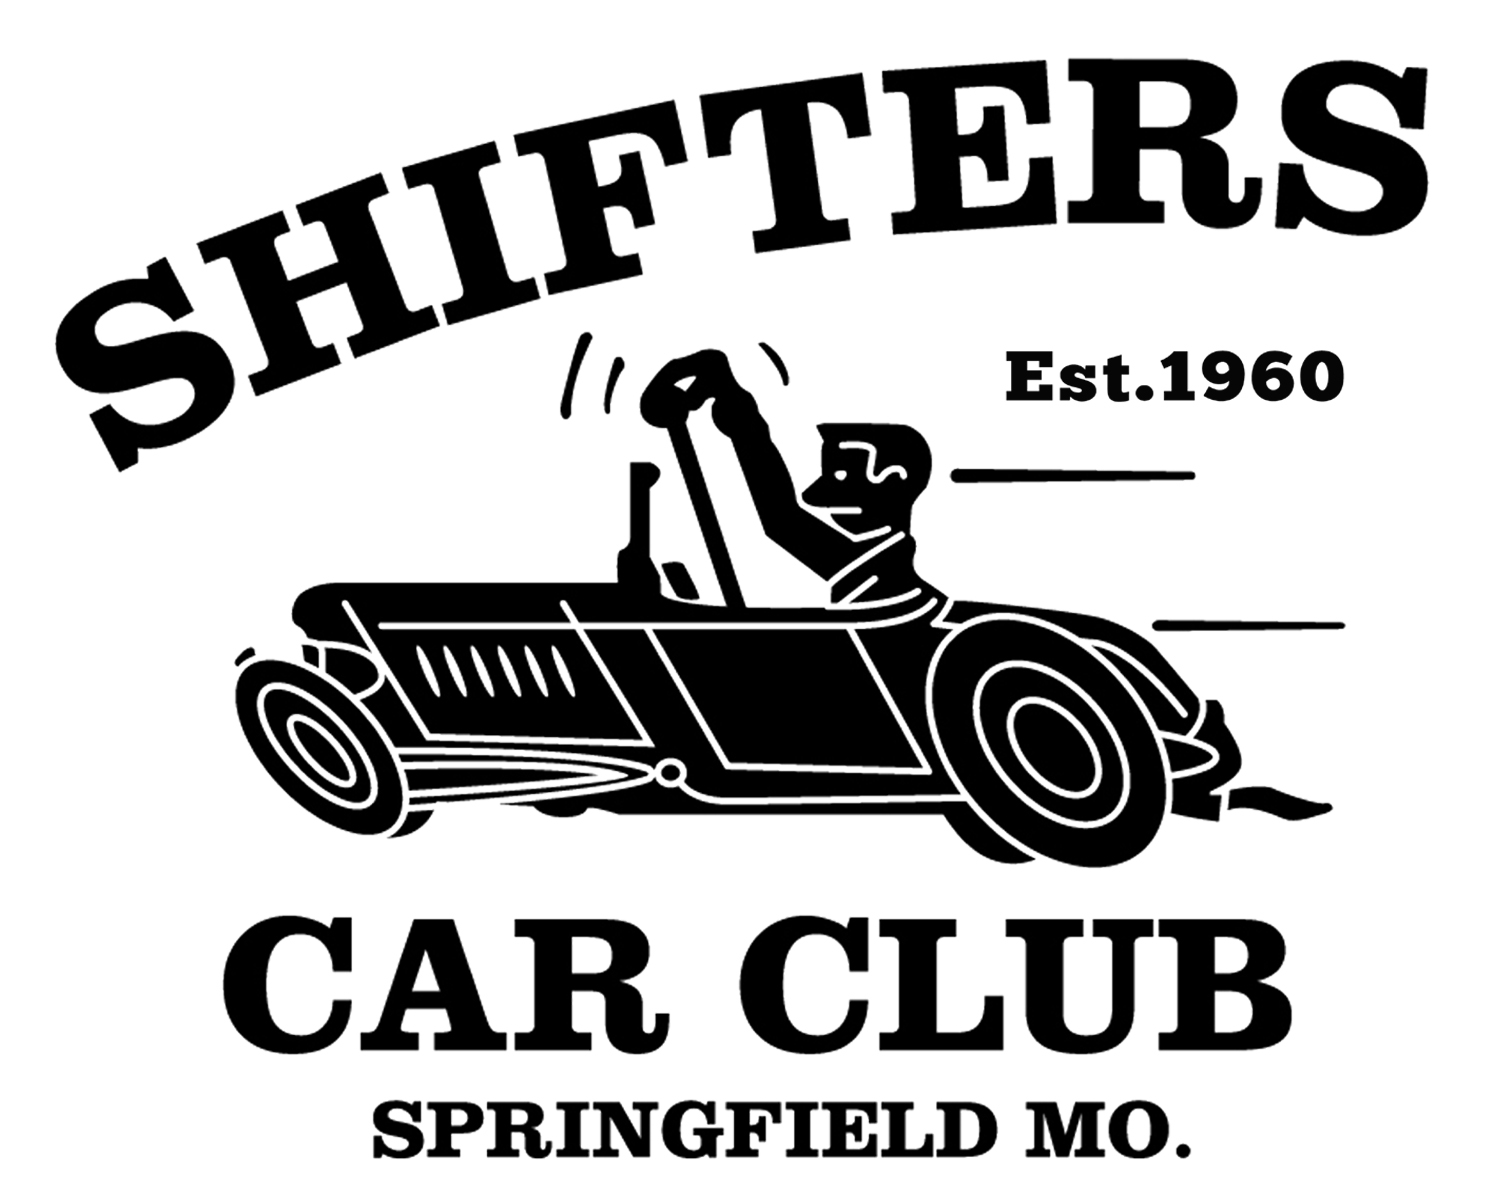 1960 Shifters logo merged flat logo 4x5